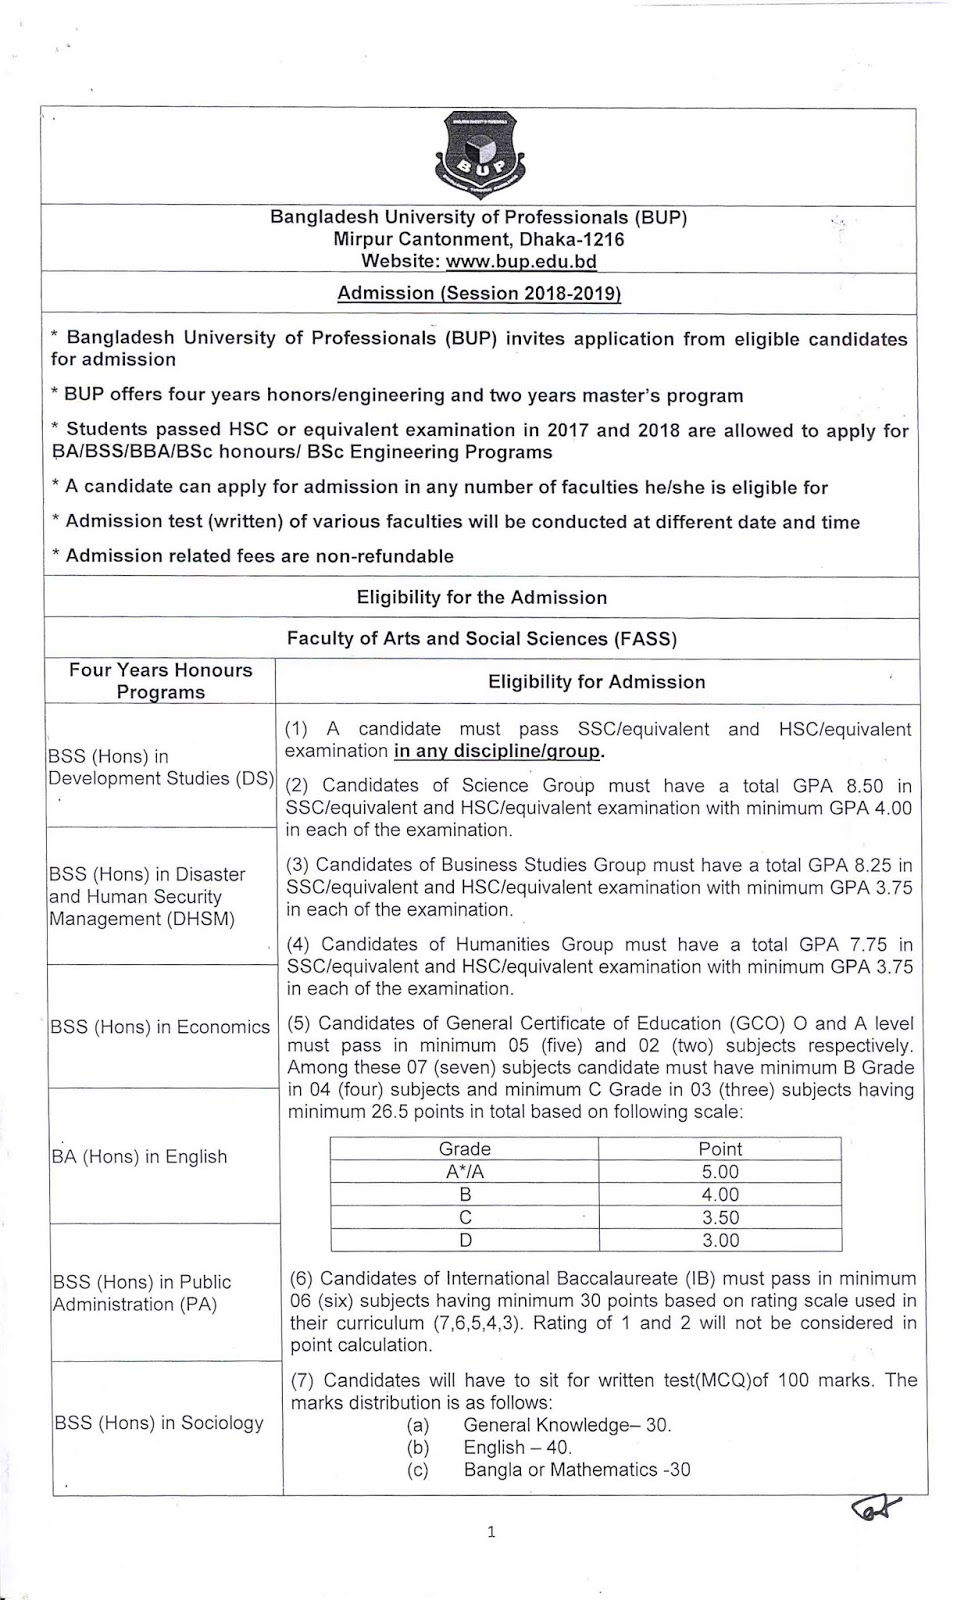 Bangladesh University of Professionals (BUP) Admission circular 2018-2019